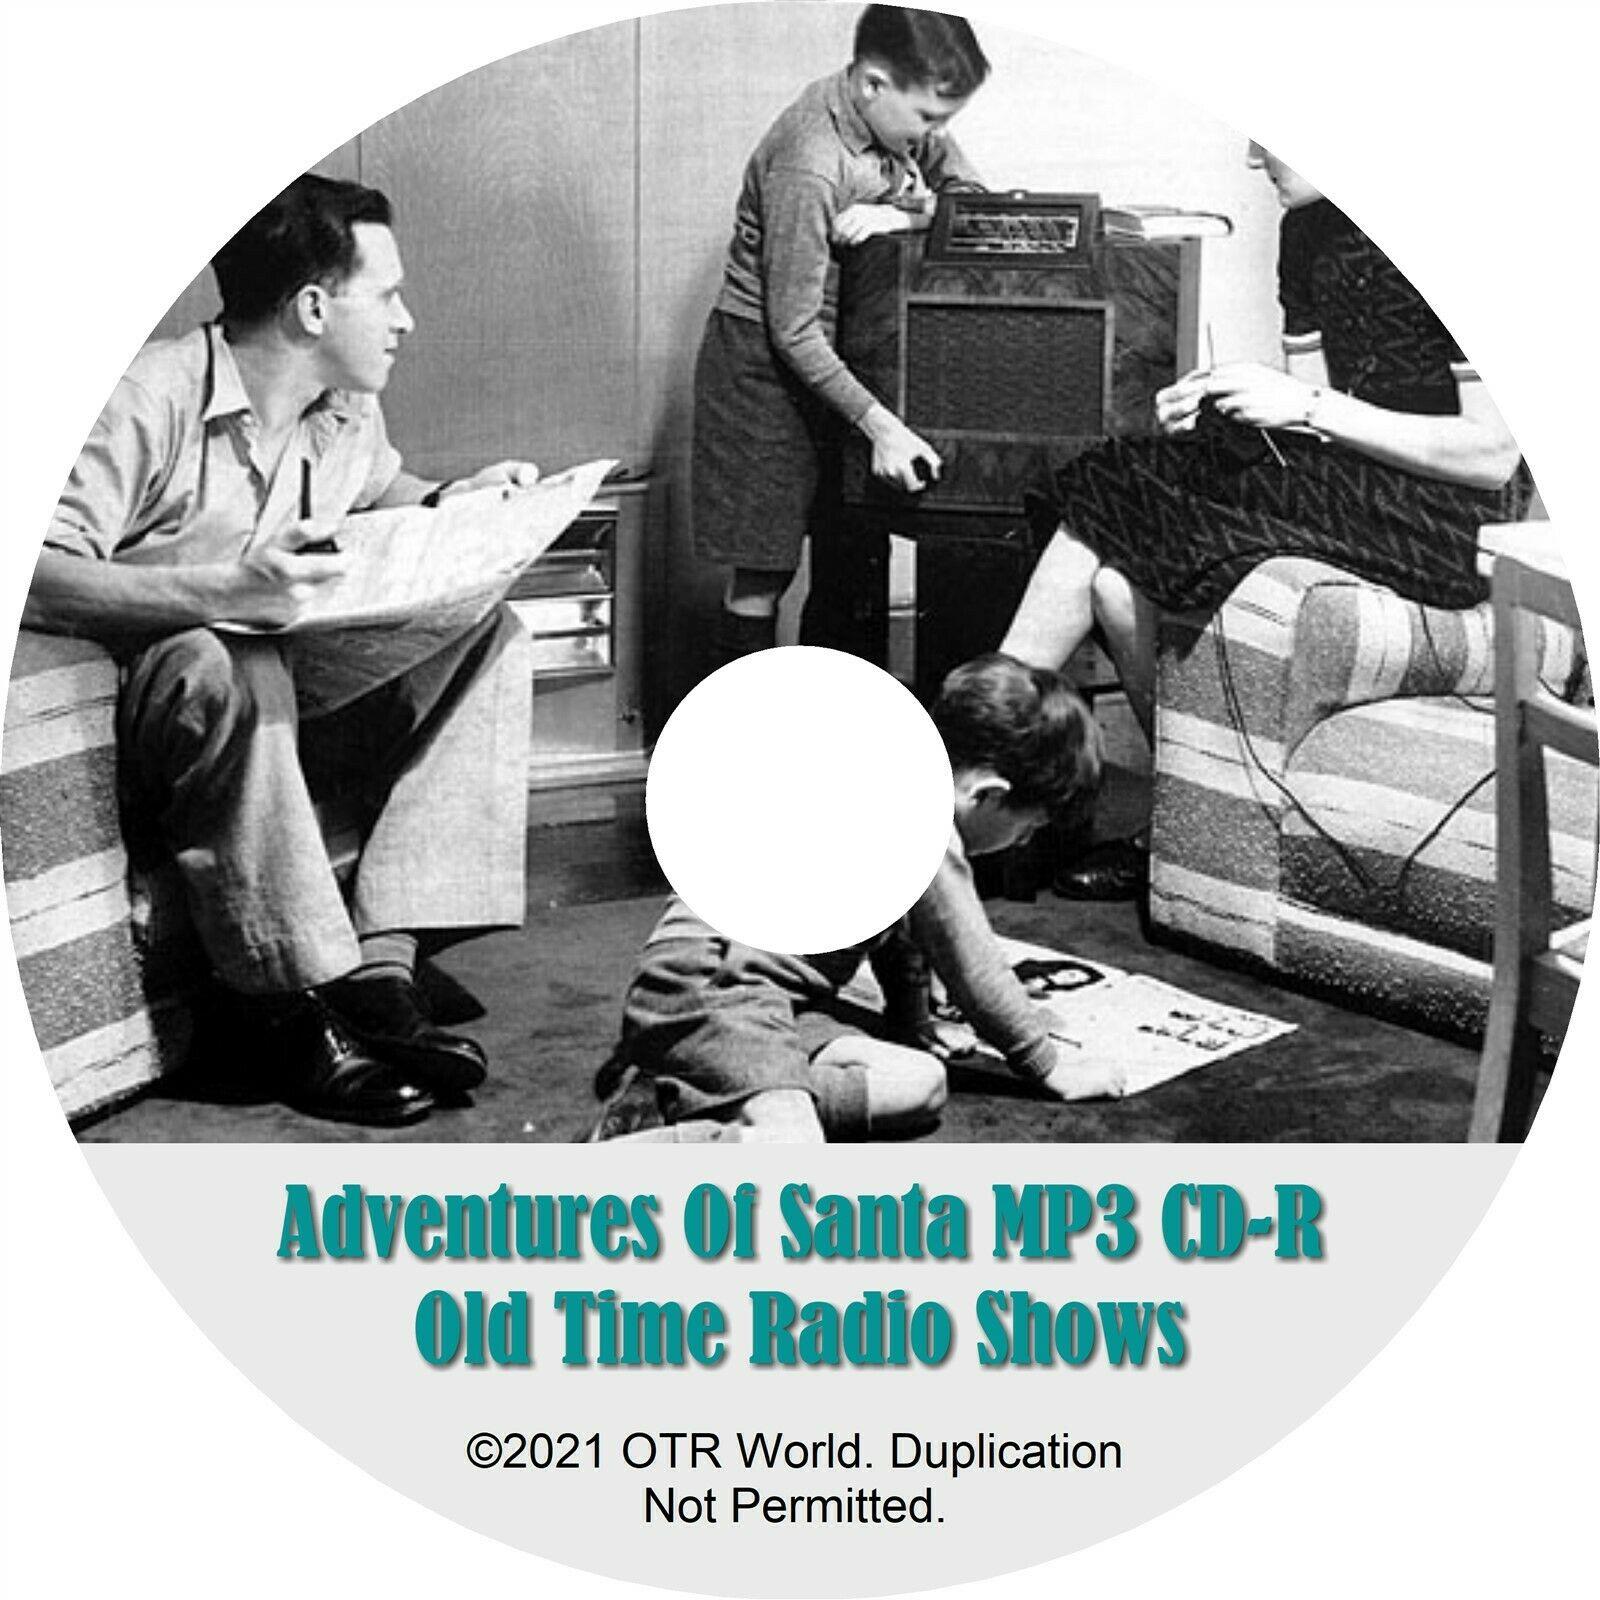 Adventures Of Santa OTRS OTR Old Time Radio Shows MP3 On CD-R 2 Episodes